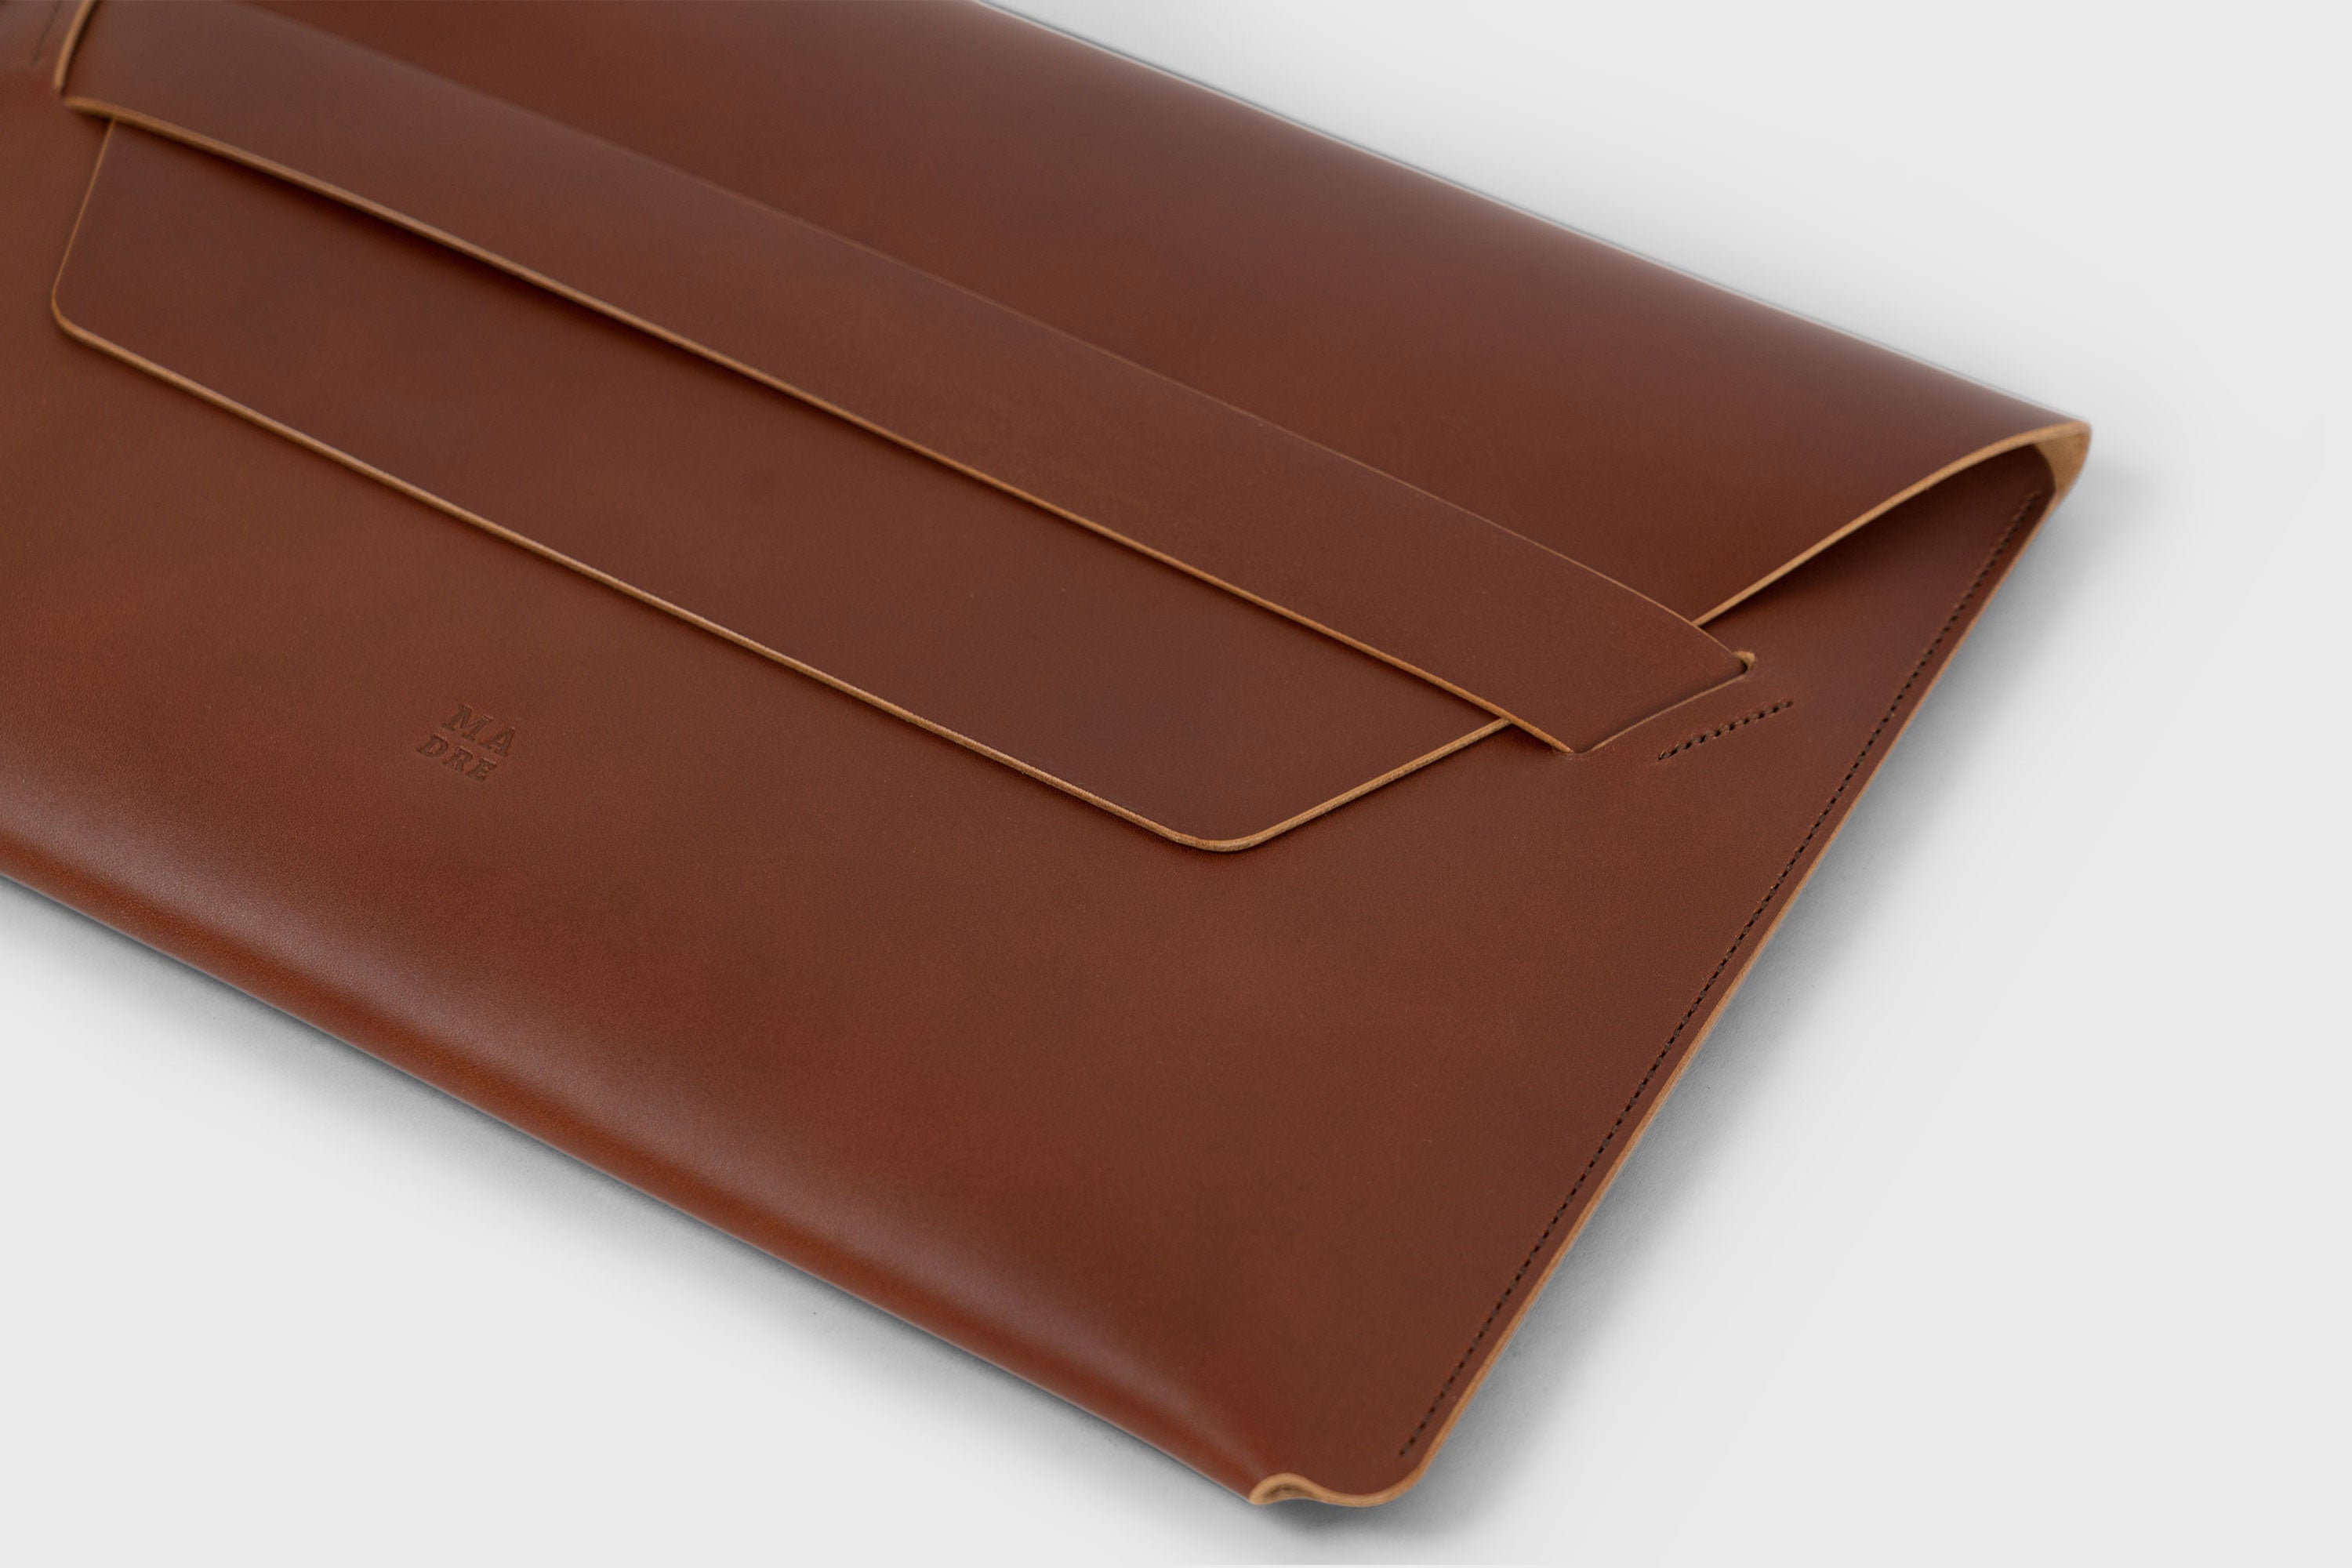 MacBook Air 13 Inch Leather Sleeve Case Dark Brown Full Grain Premium Real Leather Minimalistic Design Handmade Premium Atelier Madre Manuel Dreesmann Barcelona Spain